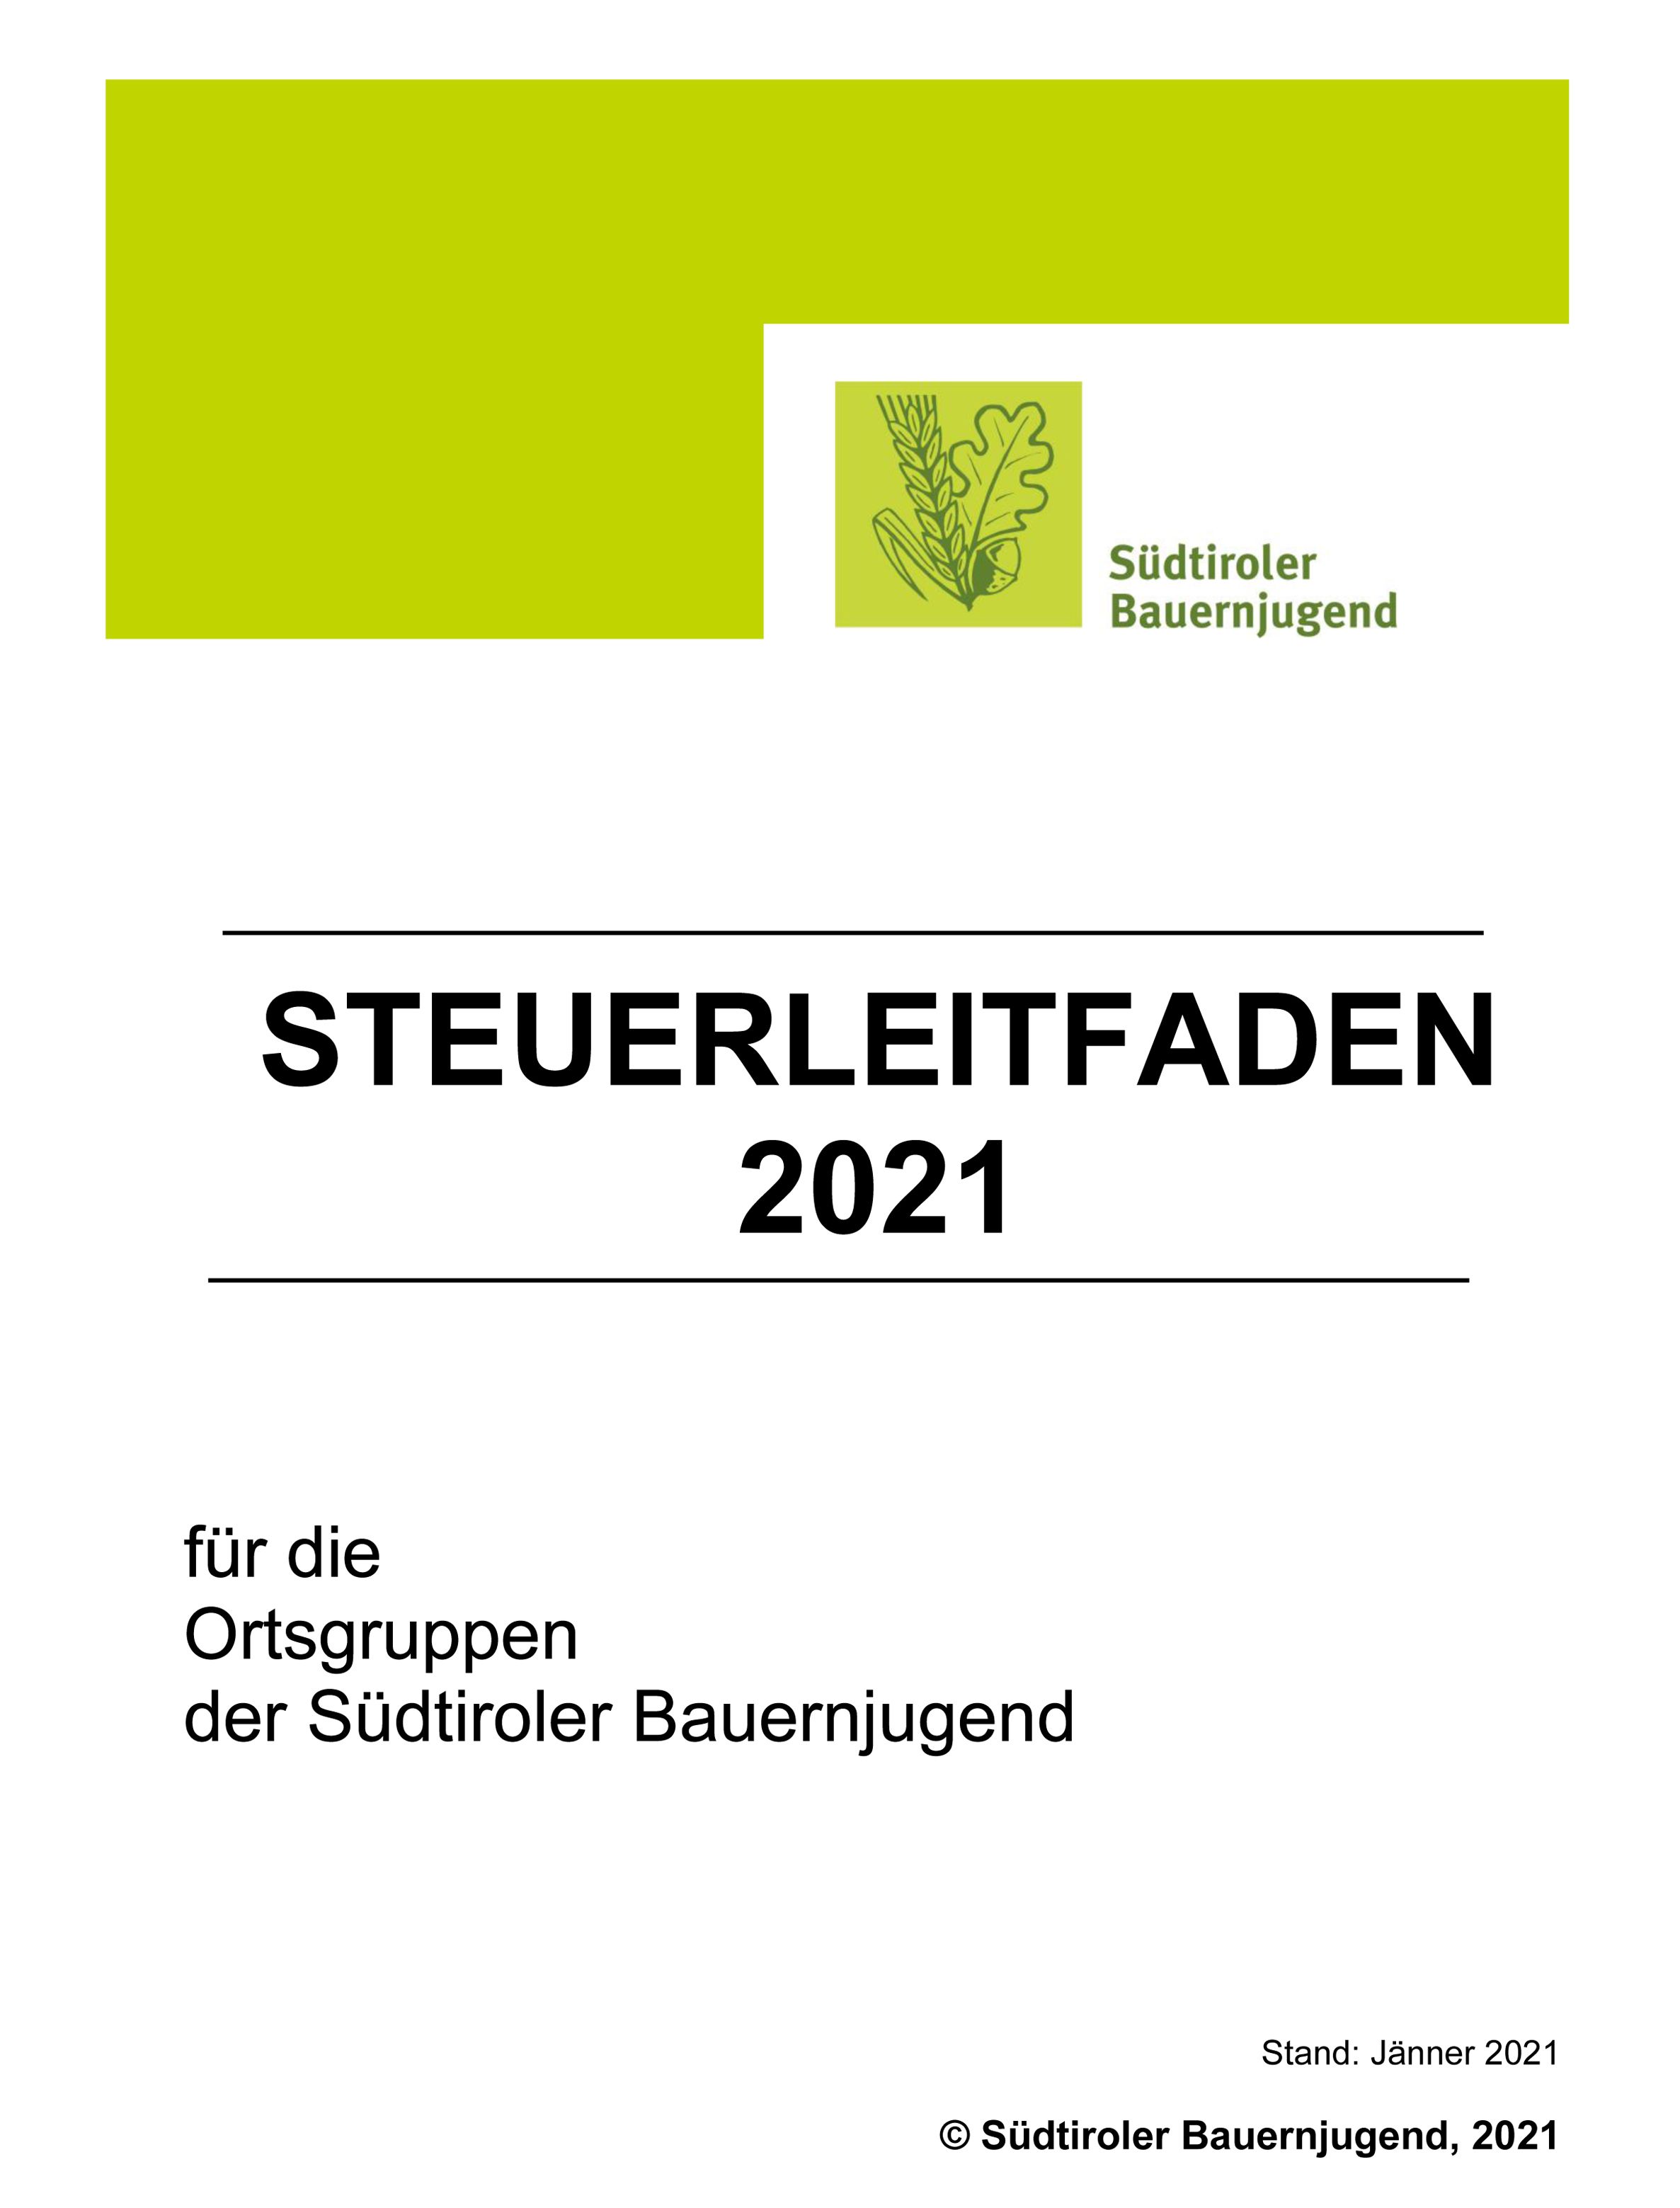 SBJ-Steuerleitfaden_2021-1.jpg